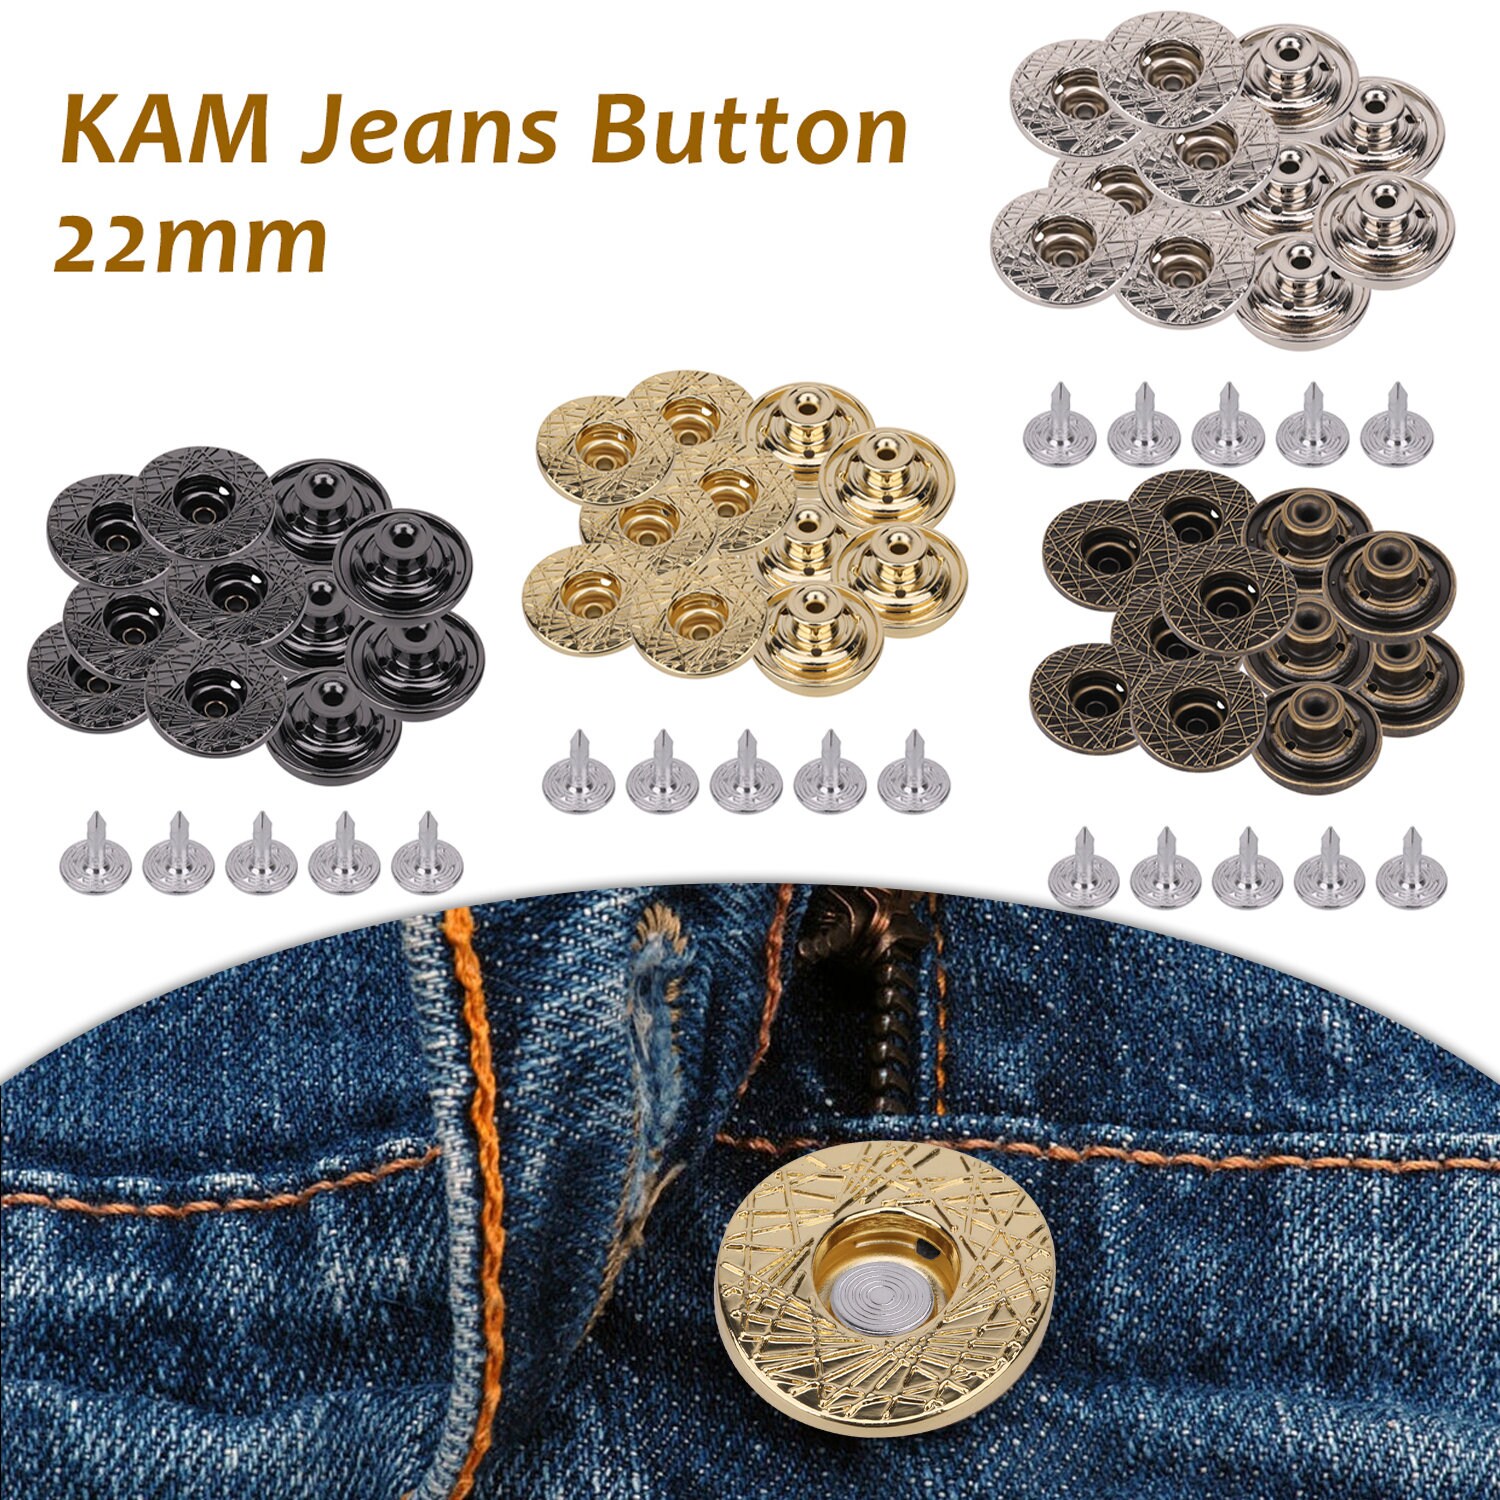 Assorted Fashion Jean Button Replacement Detachable Button Snap